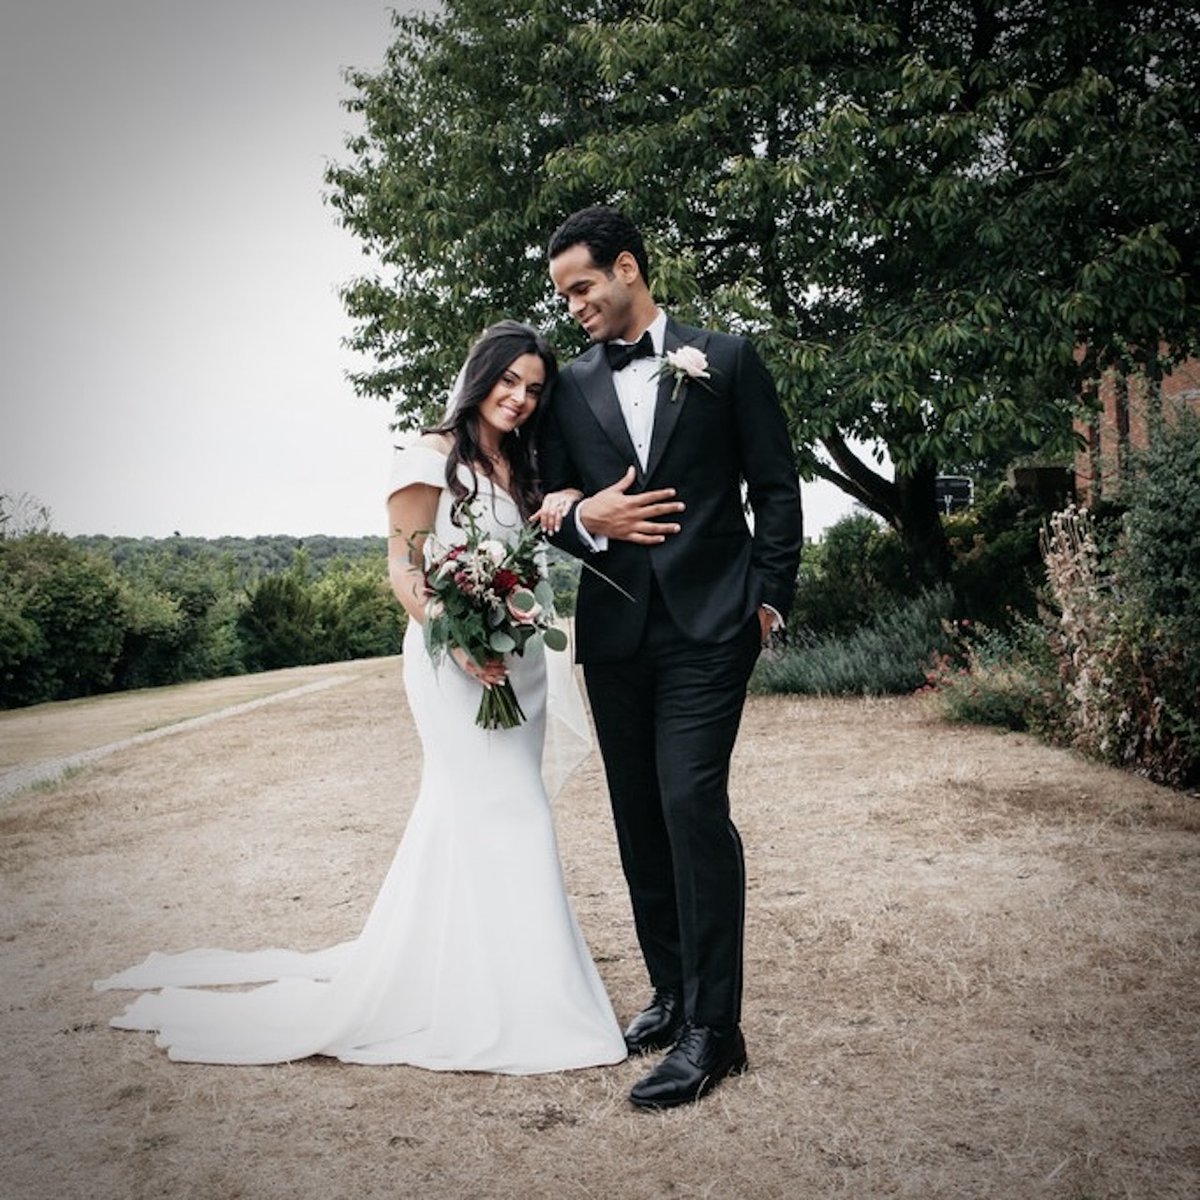 The Happy Couple! ❤️
#WeddingCeremony #CeremonyFlowers #WeddingFlowers #WeddingFlorist #WeddingDayMemories #Hertfordshire #HemelHempstead #MaplesFlowers